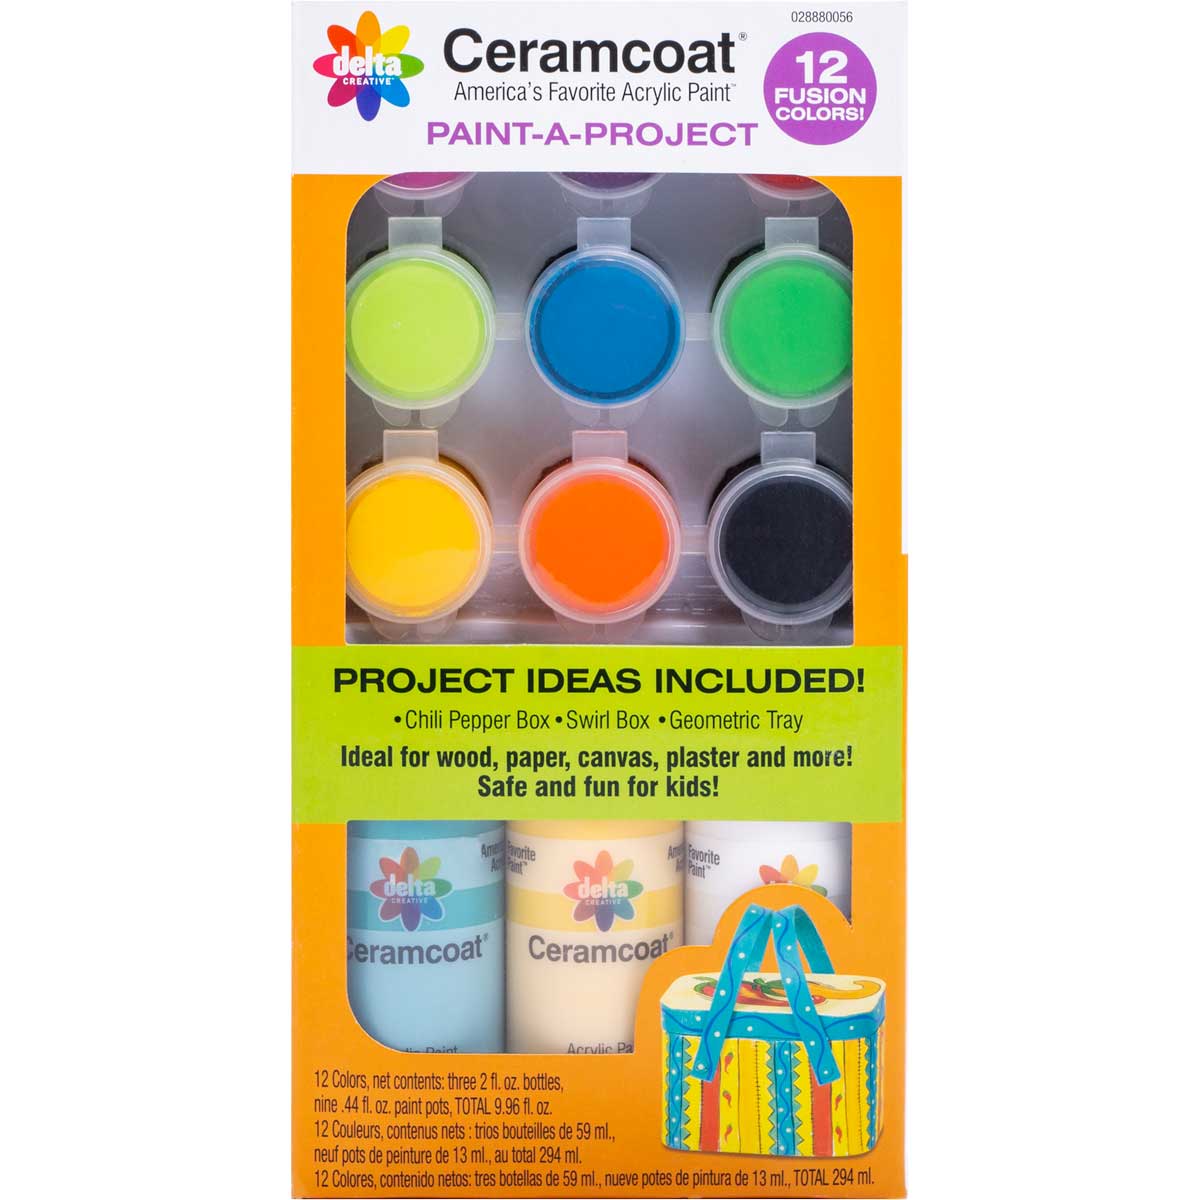 Delta Ceramcoat ® Paint-A-Project - Fusion, 12 Colors - 028880056